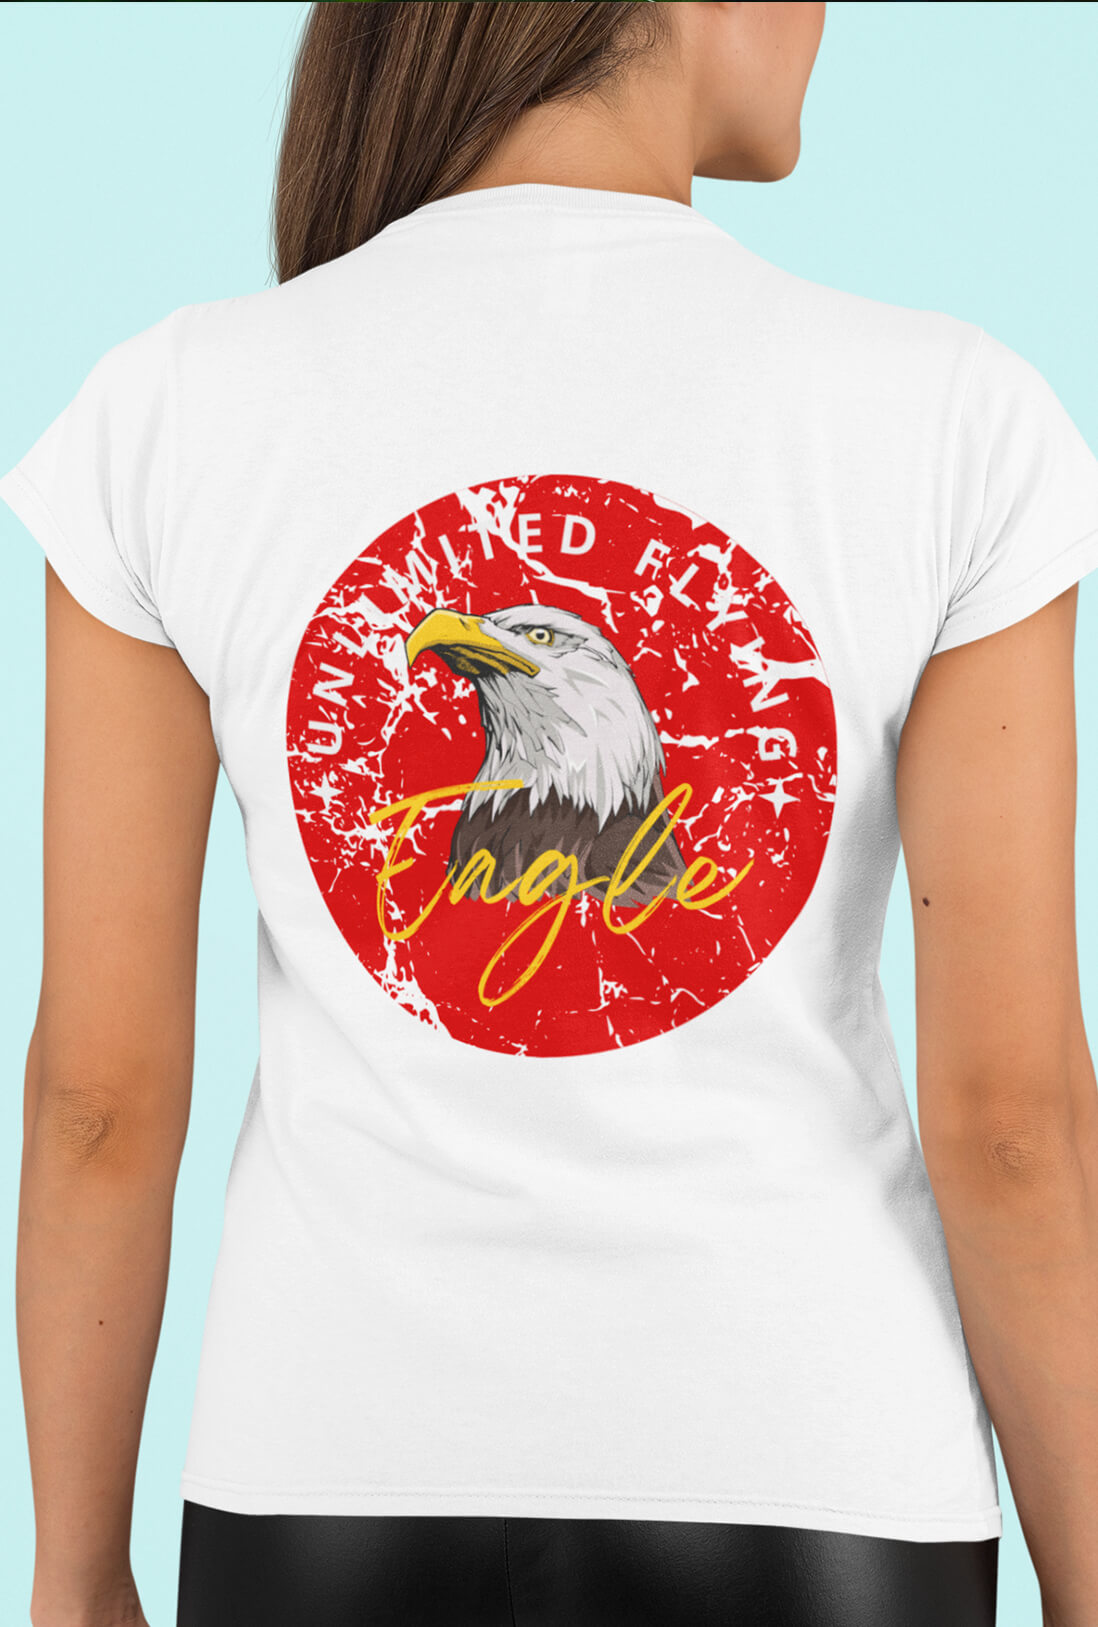 Flying Eagle Women's Back Printed T-Shirt